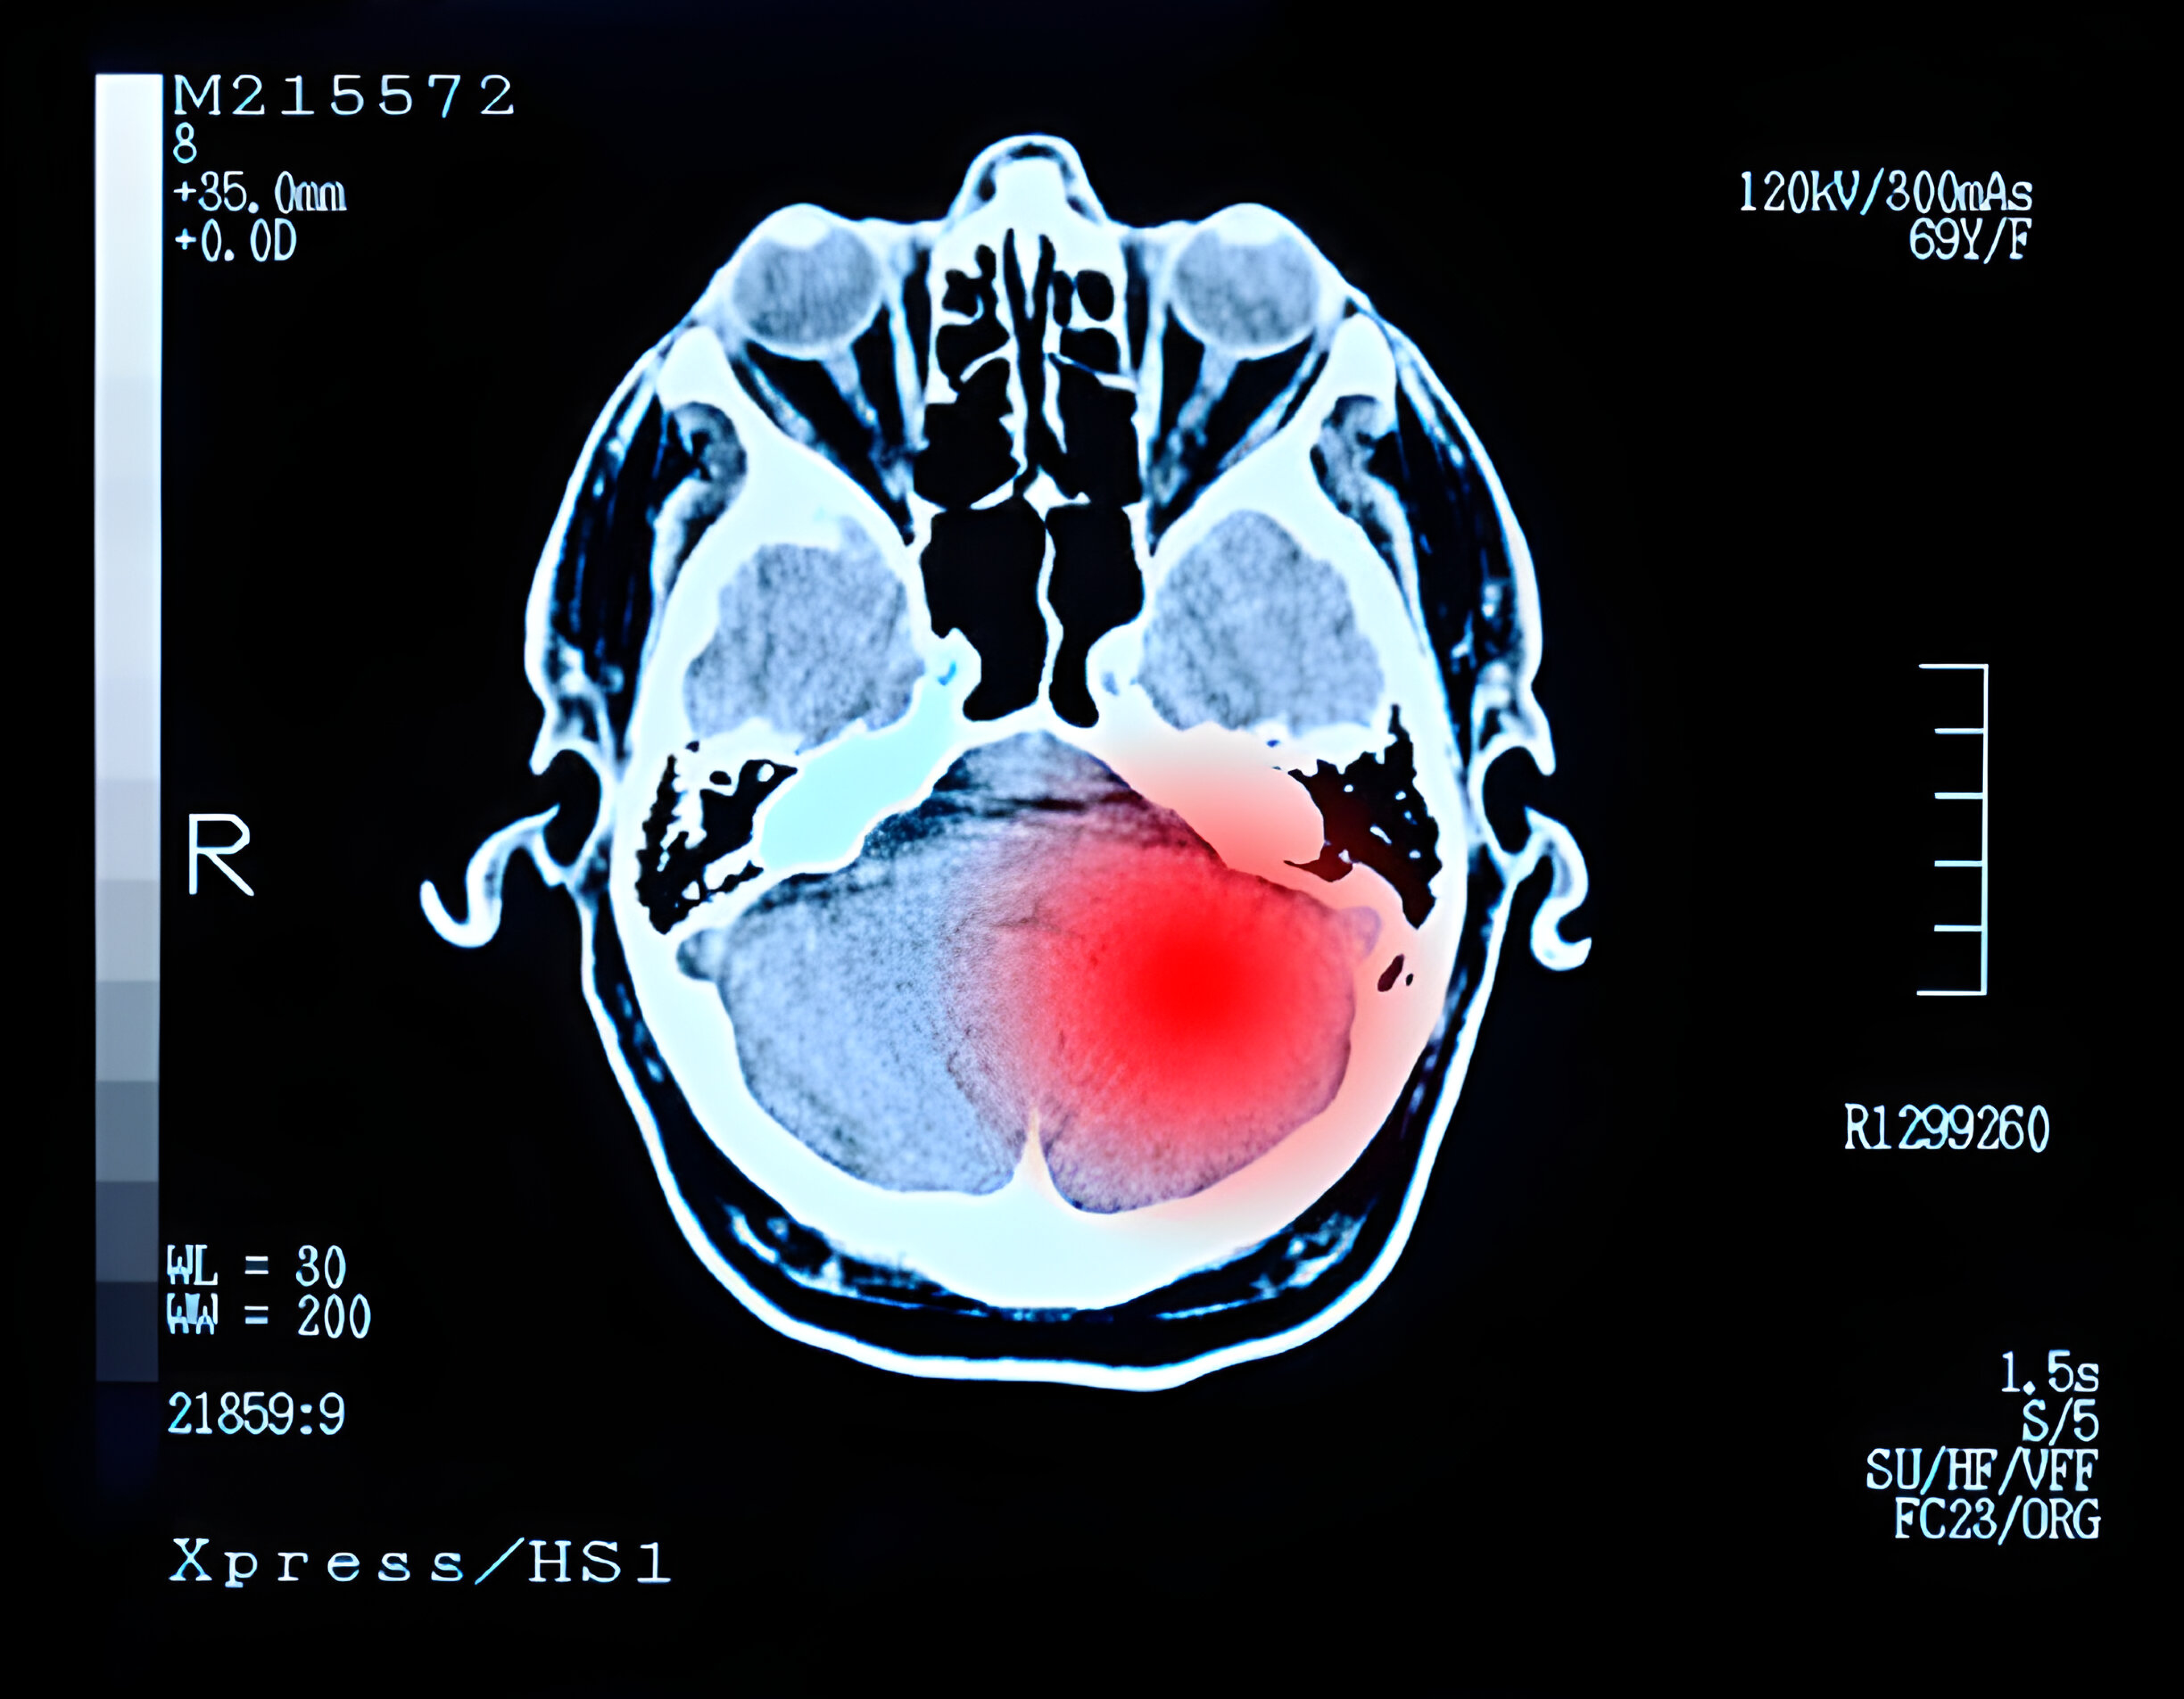 Advanced Traumatic Brain Injury Scan Services in Florida